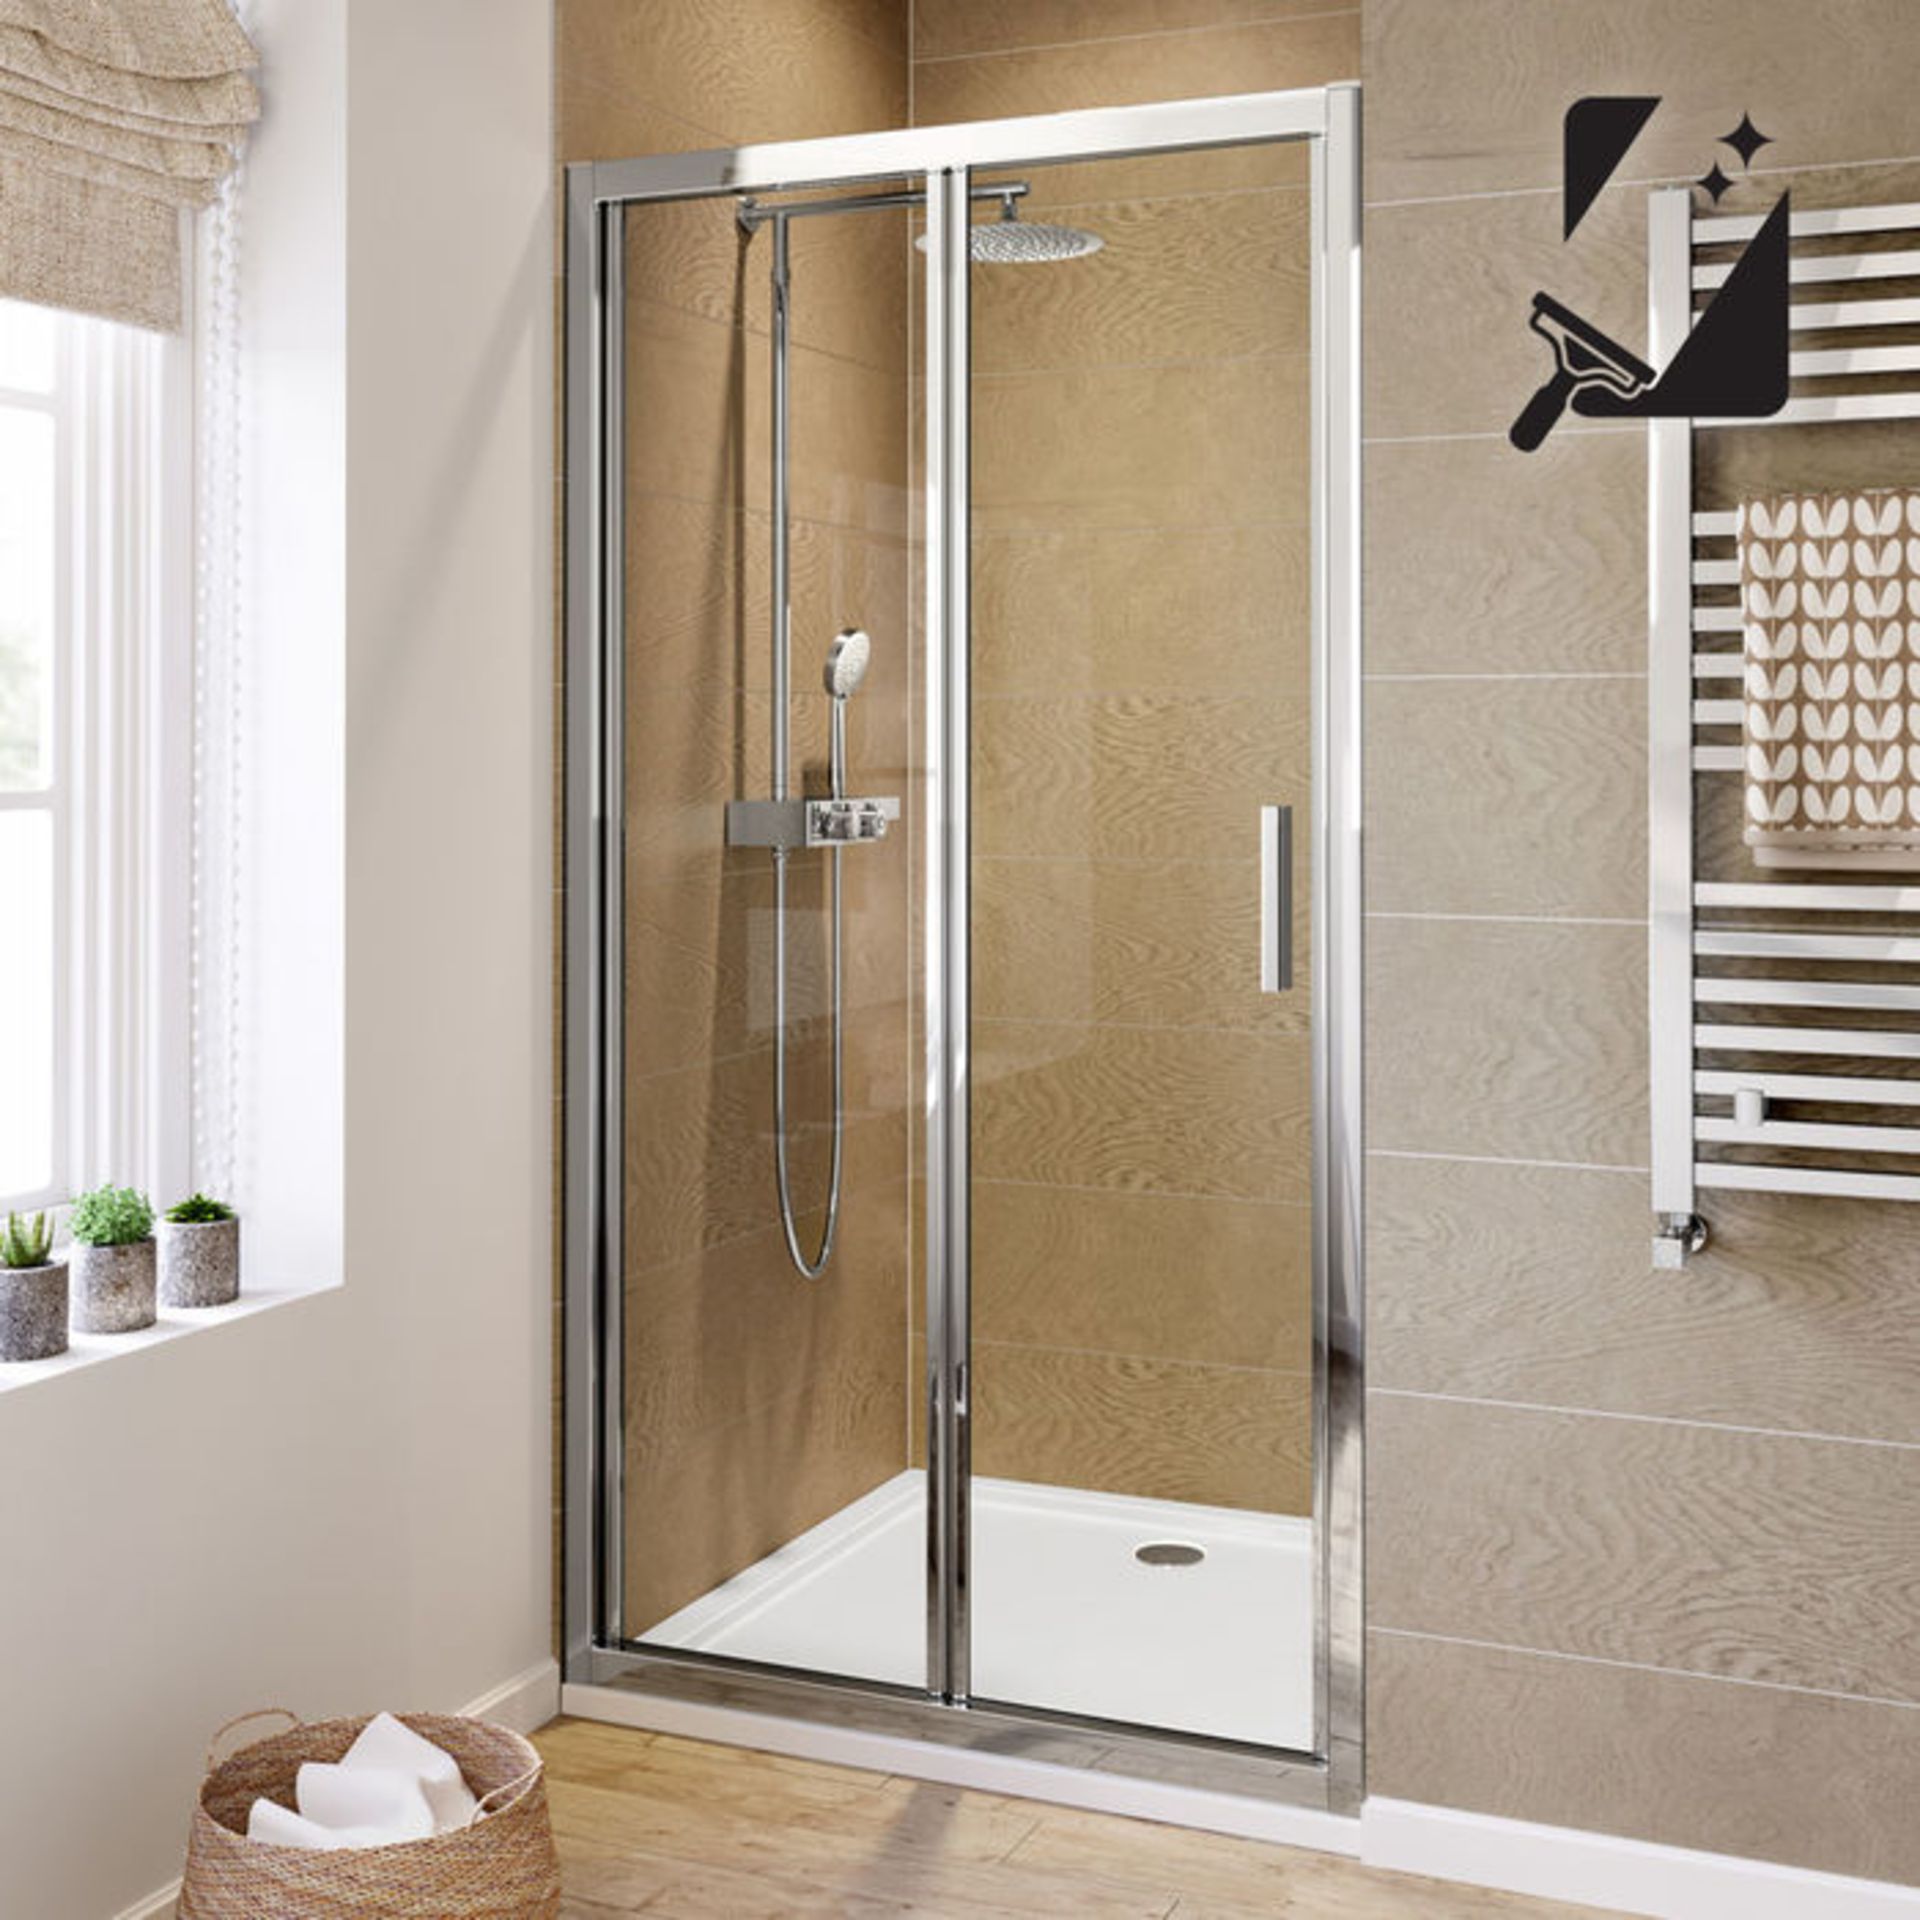 (ZA215) 1000mm - 6mm - Elements EasyClean Bifold Shower Door. RRP £239.99. 6mm Safety Glass -